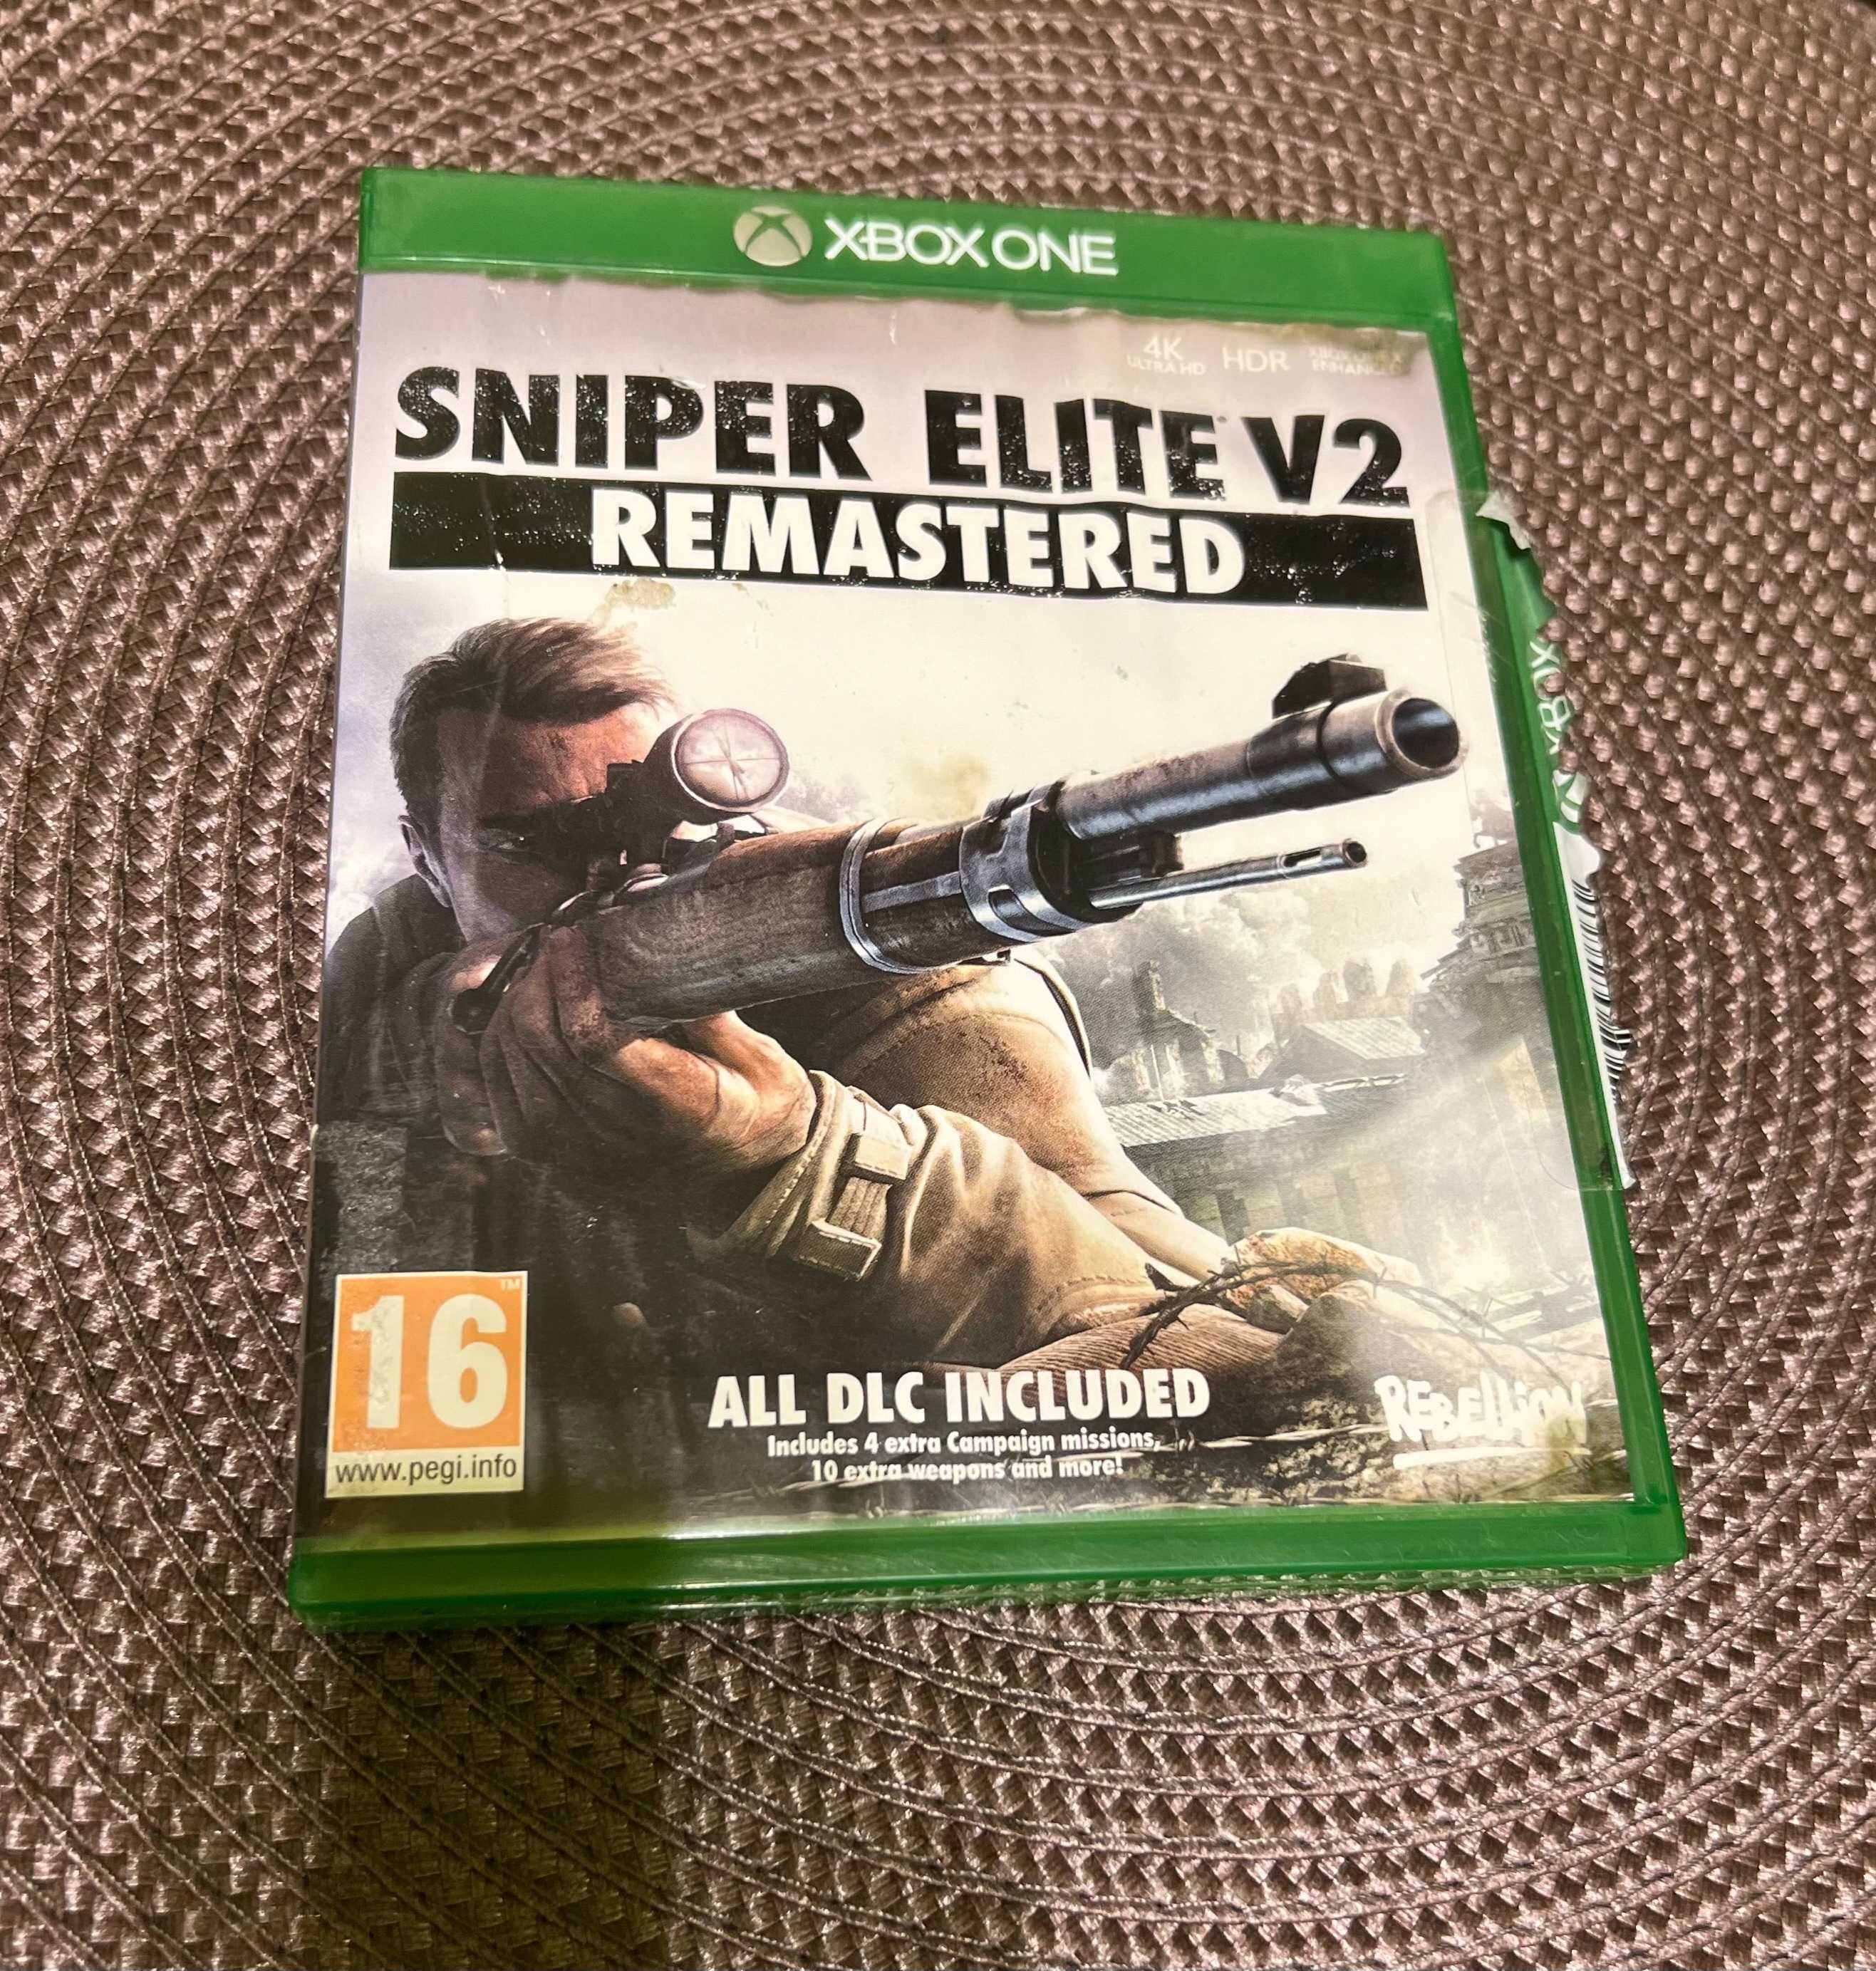 Sniper elite V2 remastered